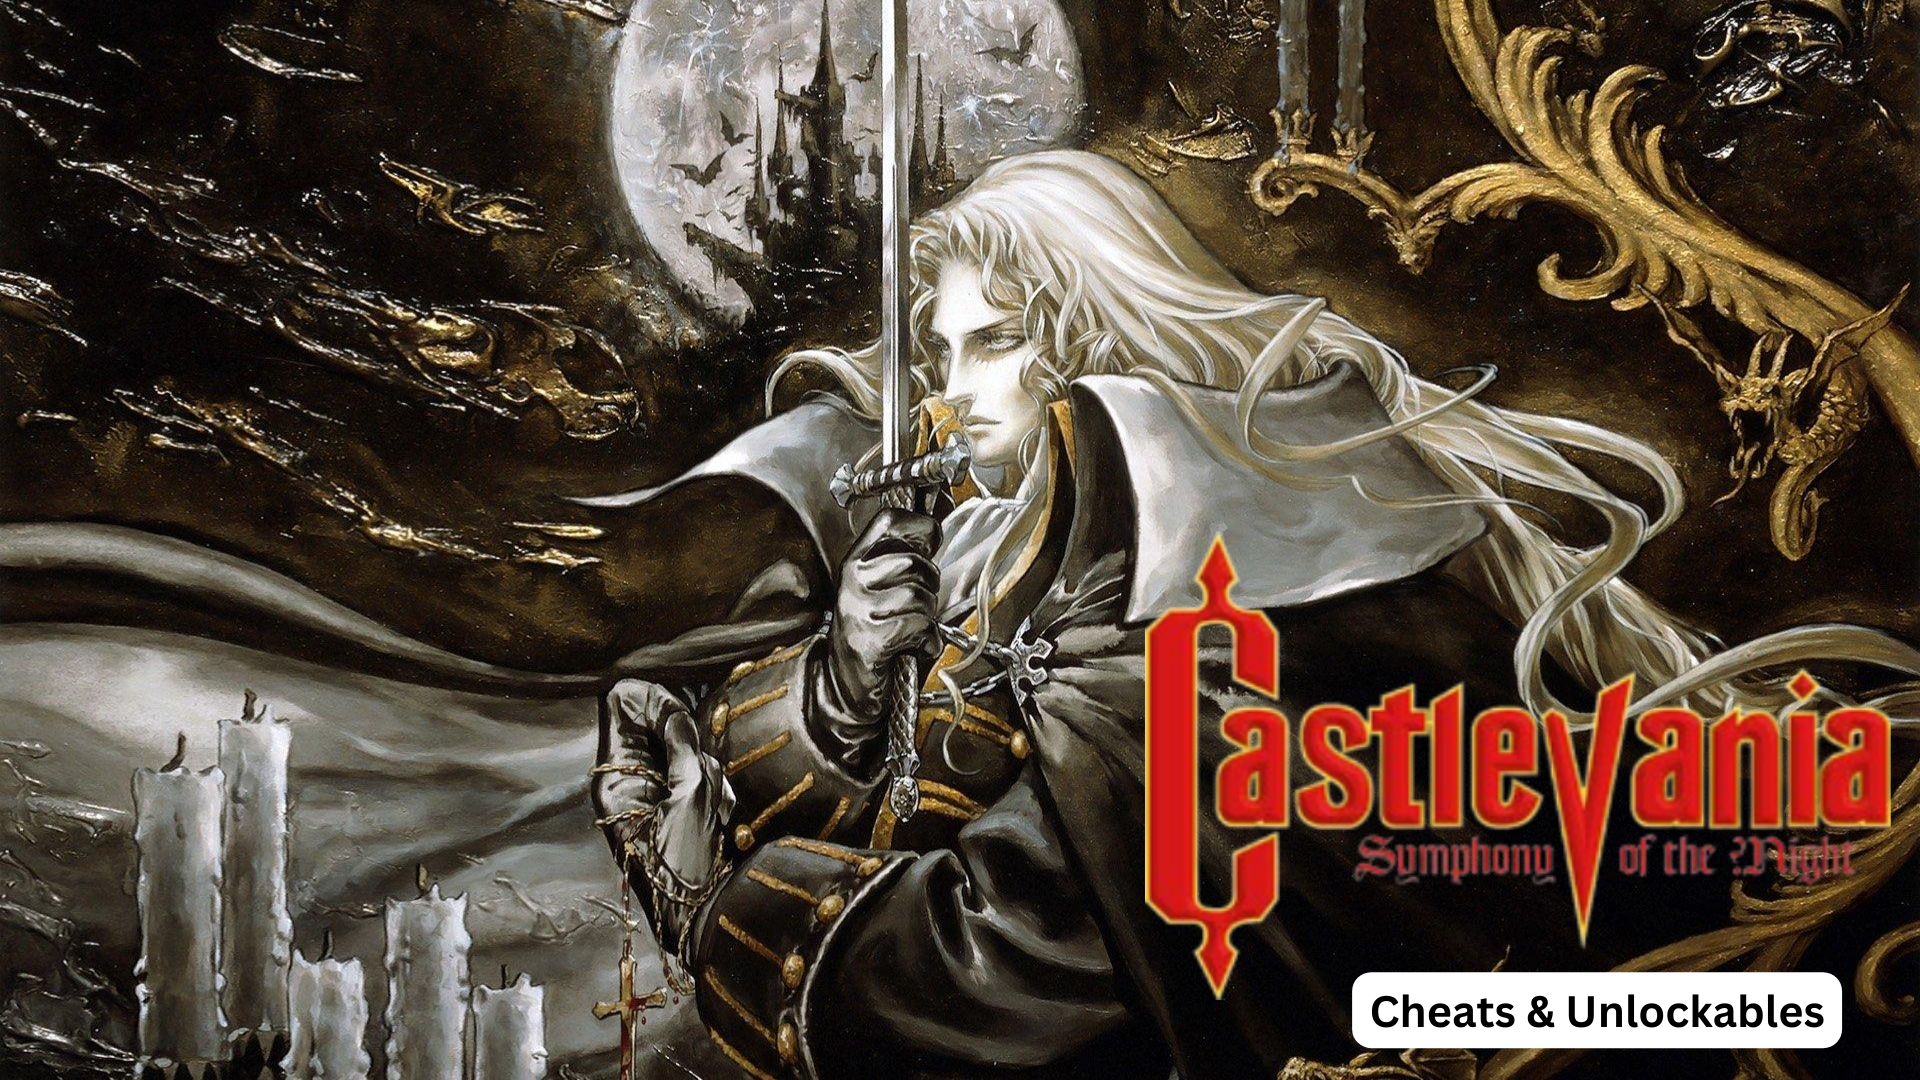 castlevania: symphony of the night cheats and unlockables